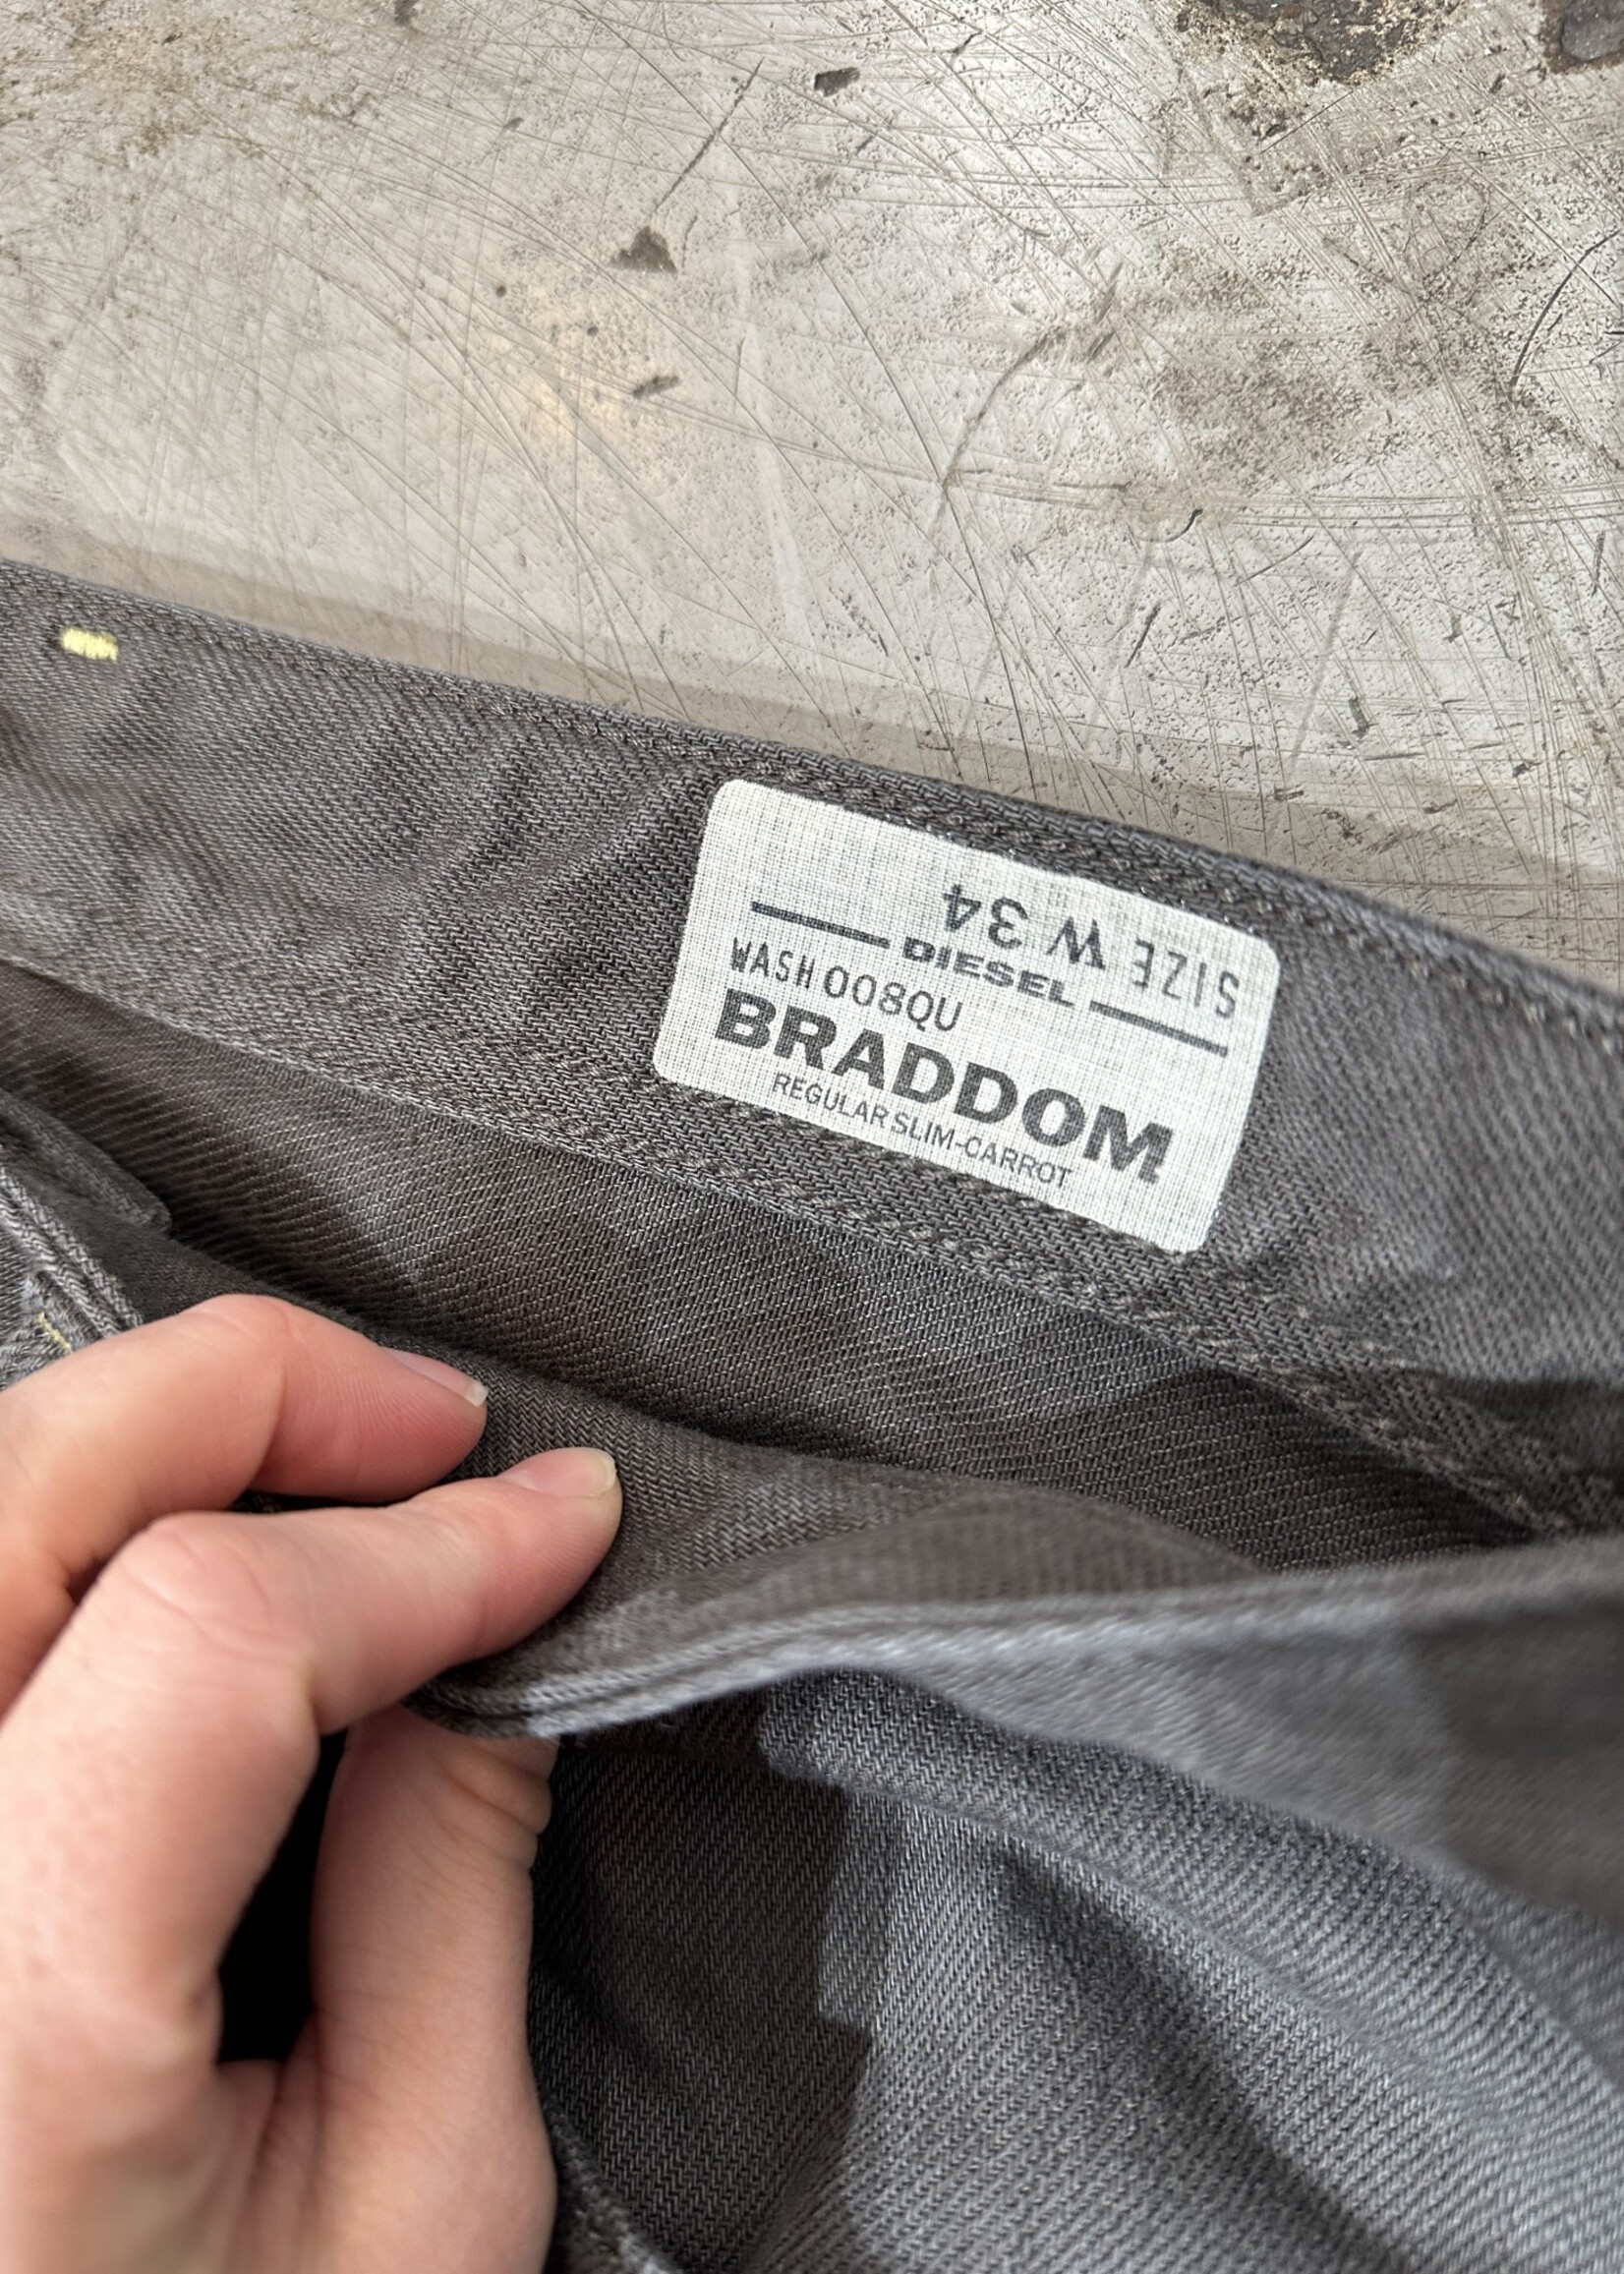 Diesel 'Braddom' Grey Wash Straight Leg Jeans 34"